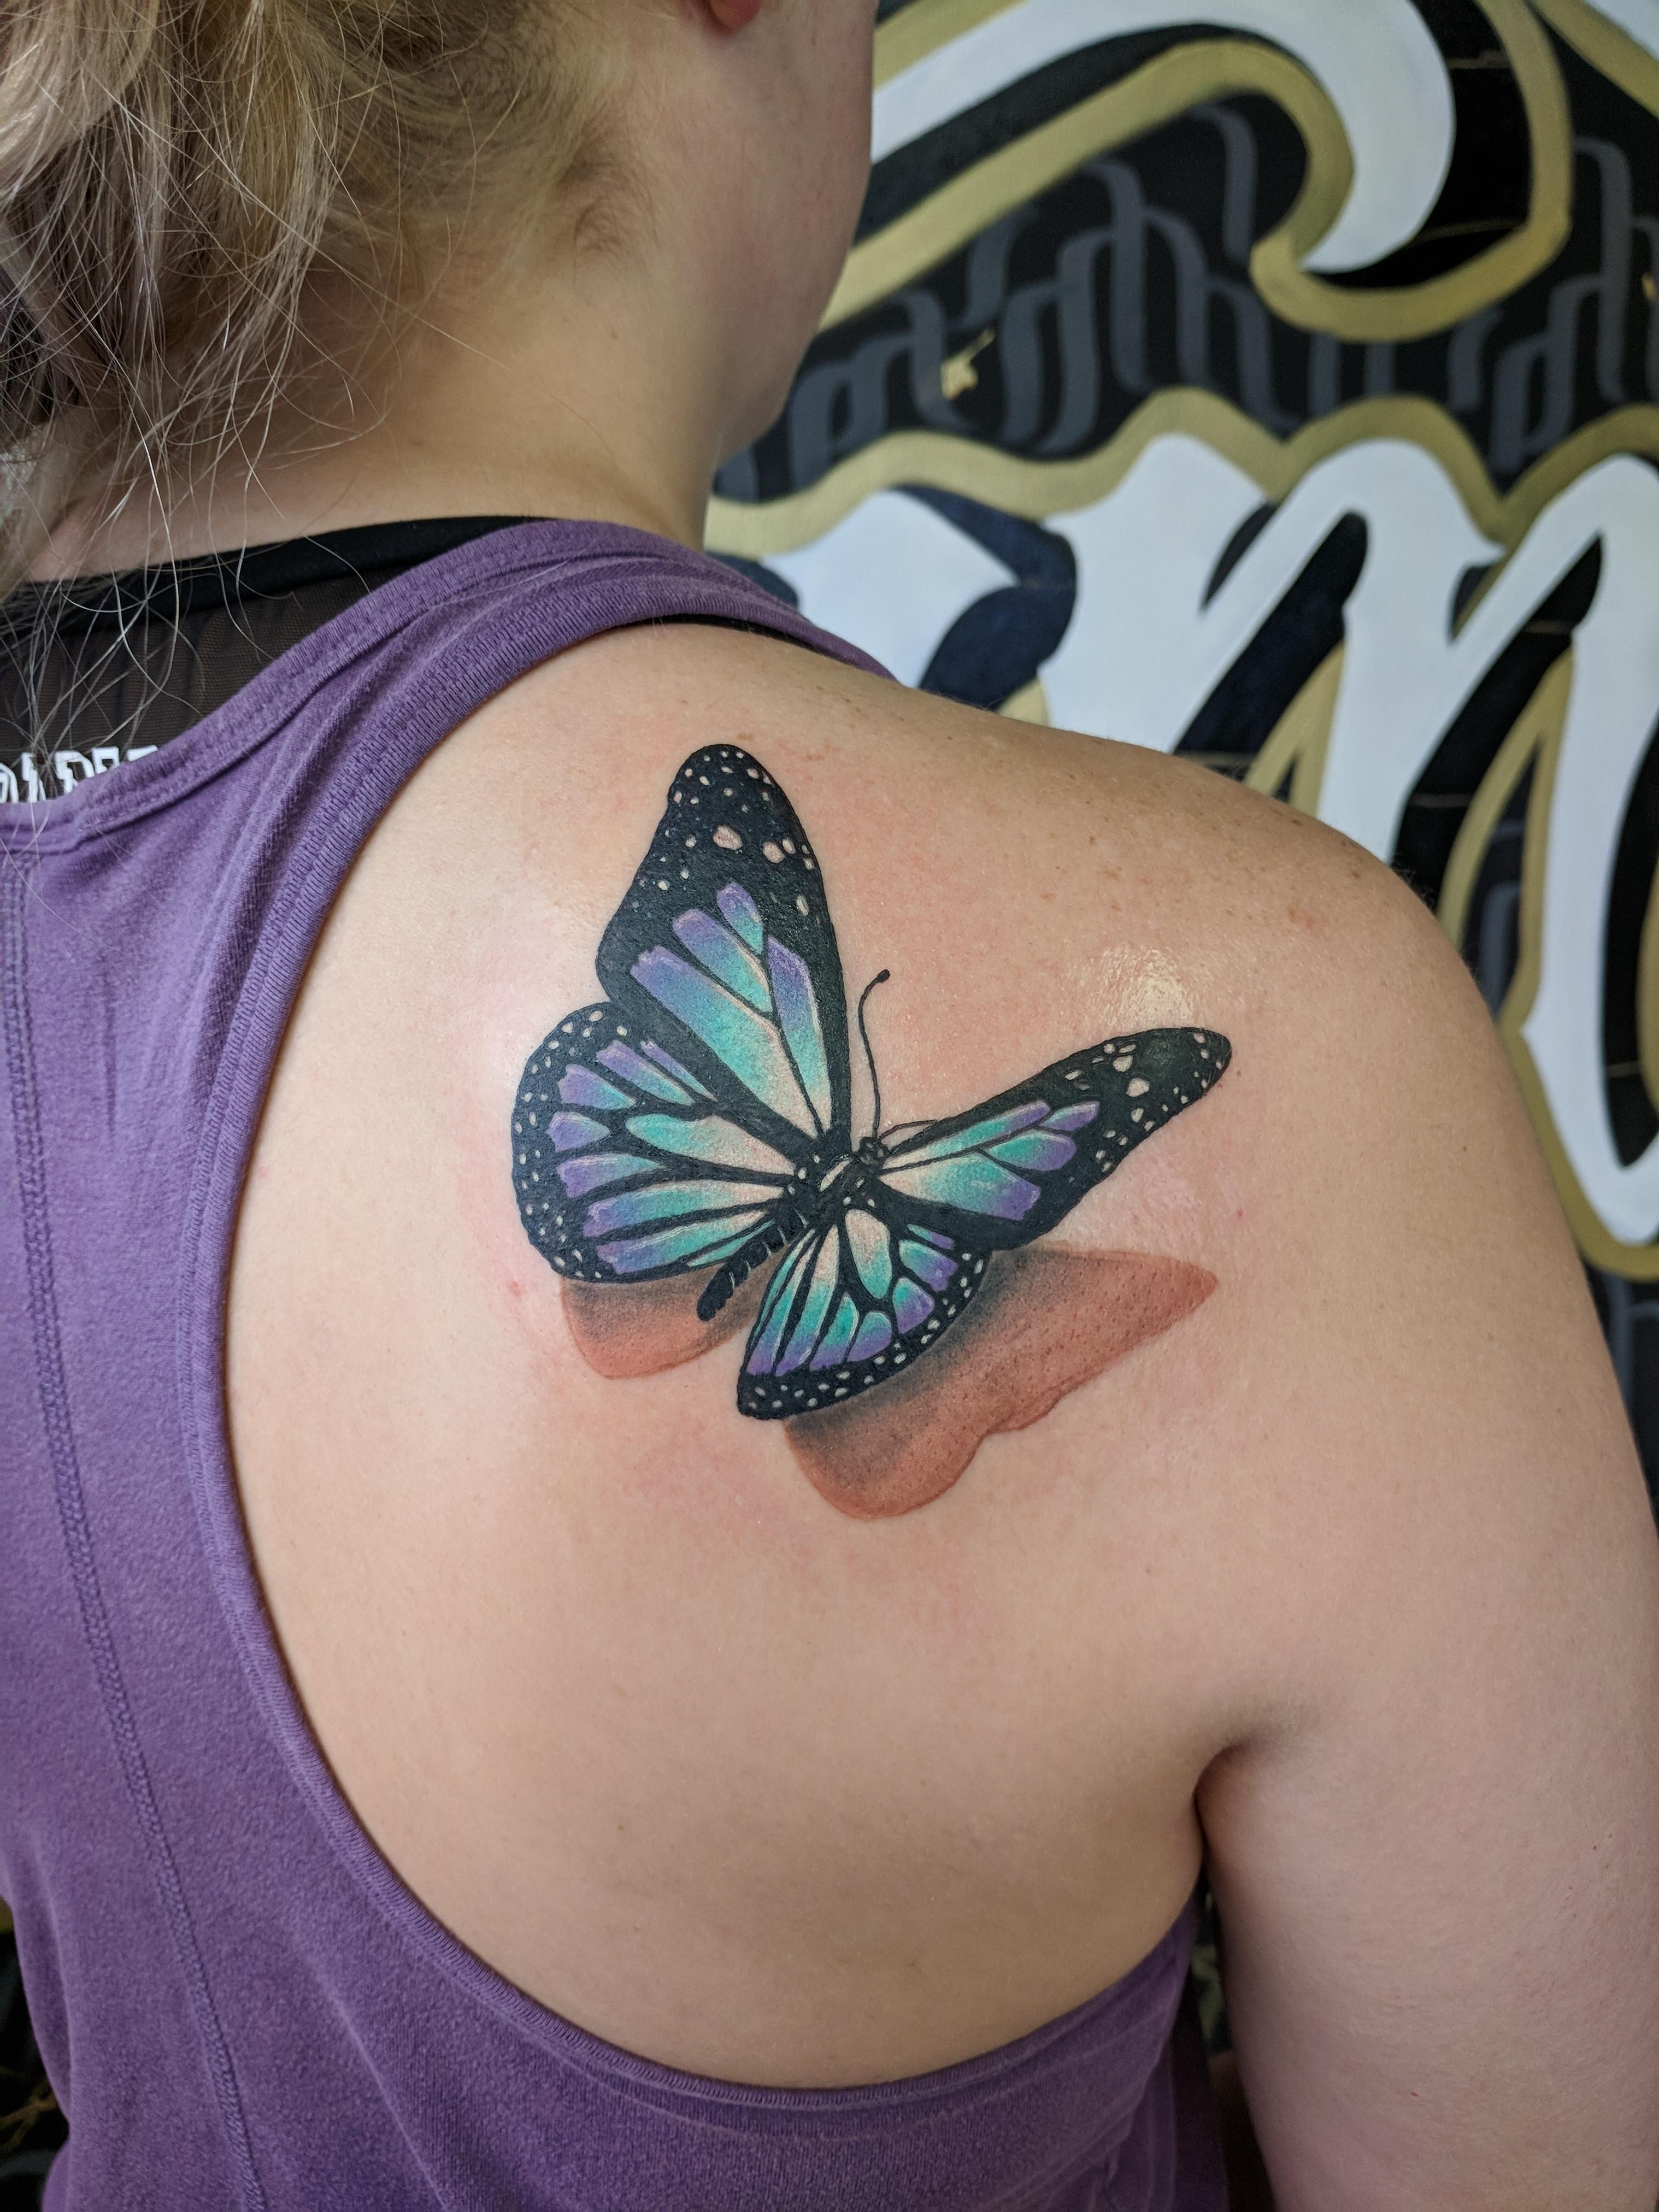 3d Butterfly Done Juan At Virginia Class Tattoo Manassas Va within sizing 3036 X 4048